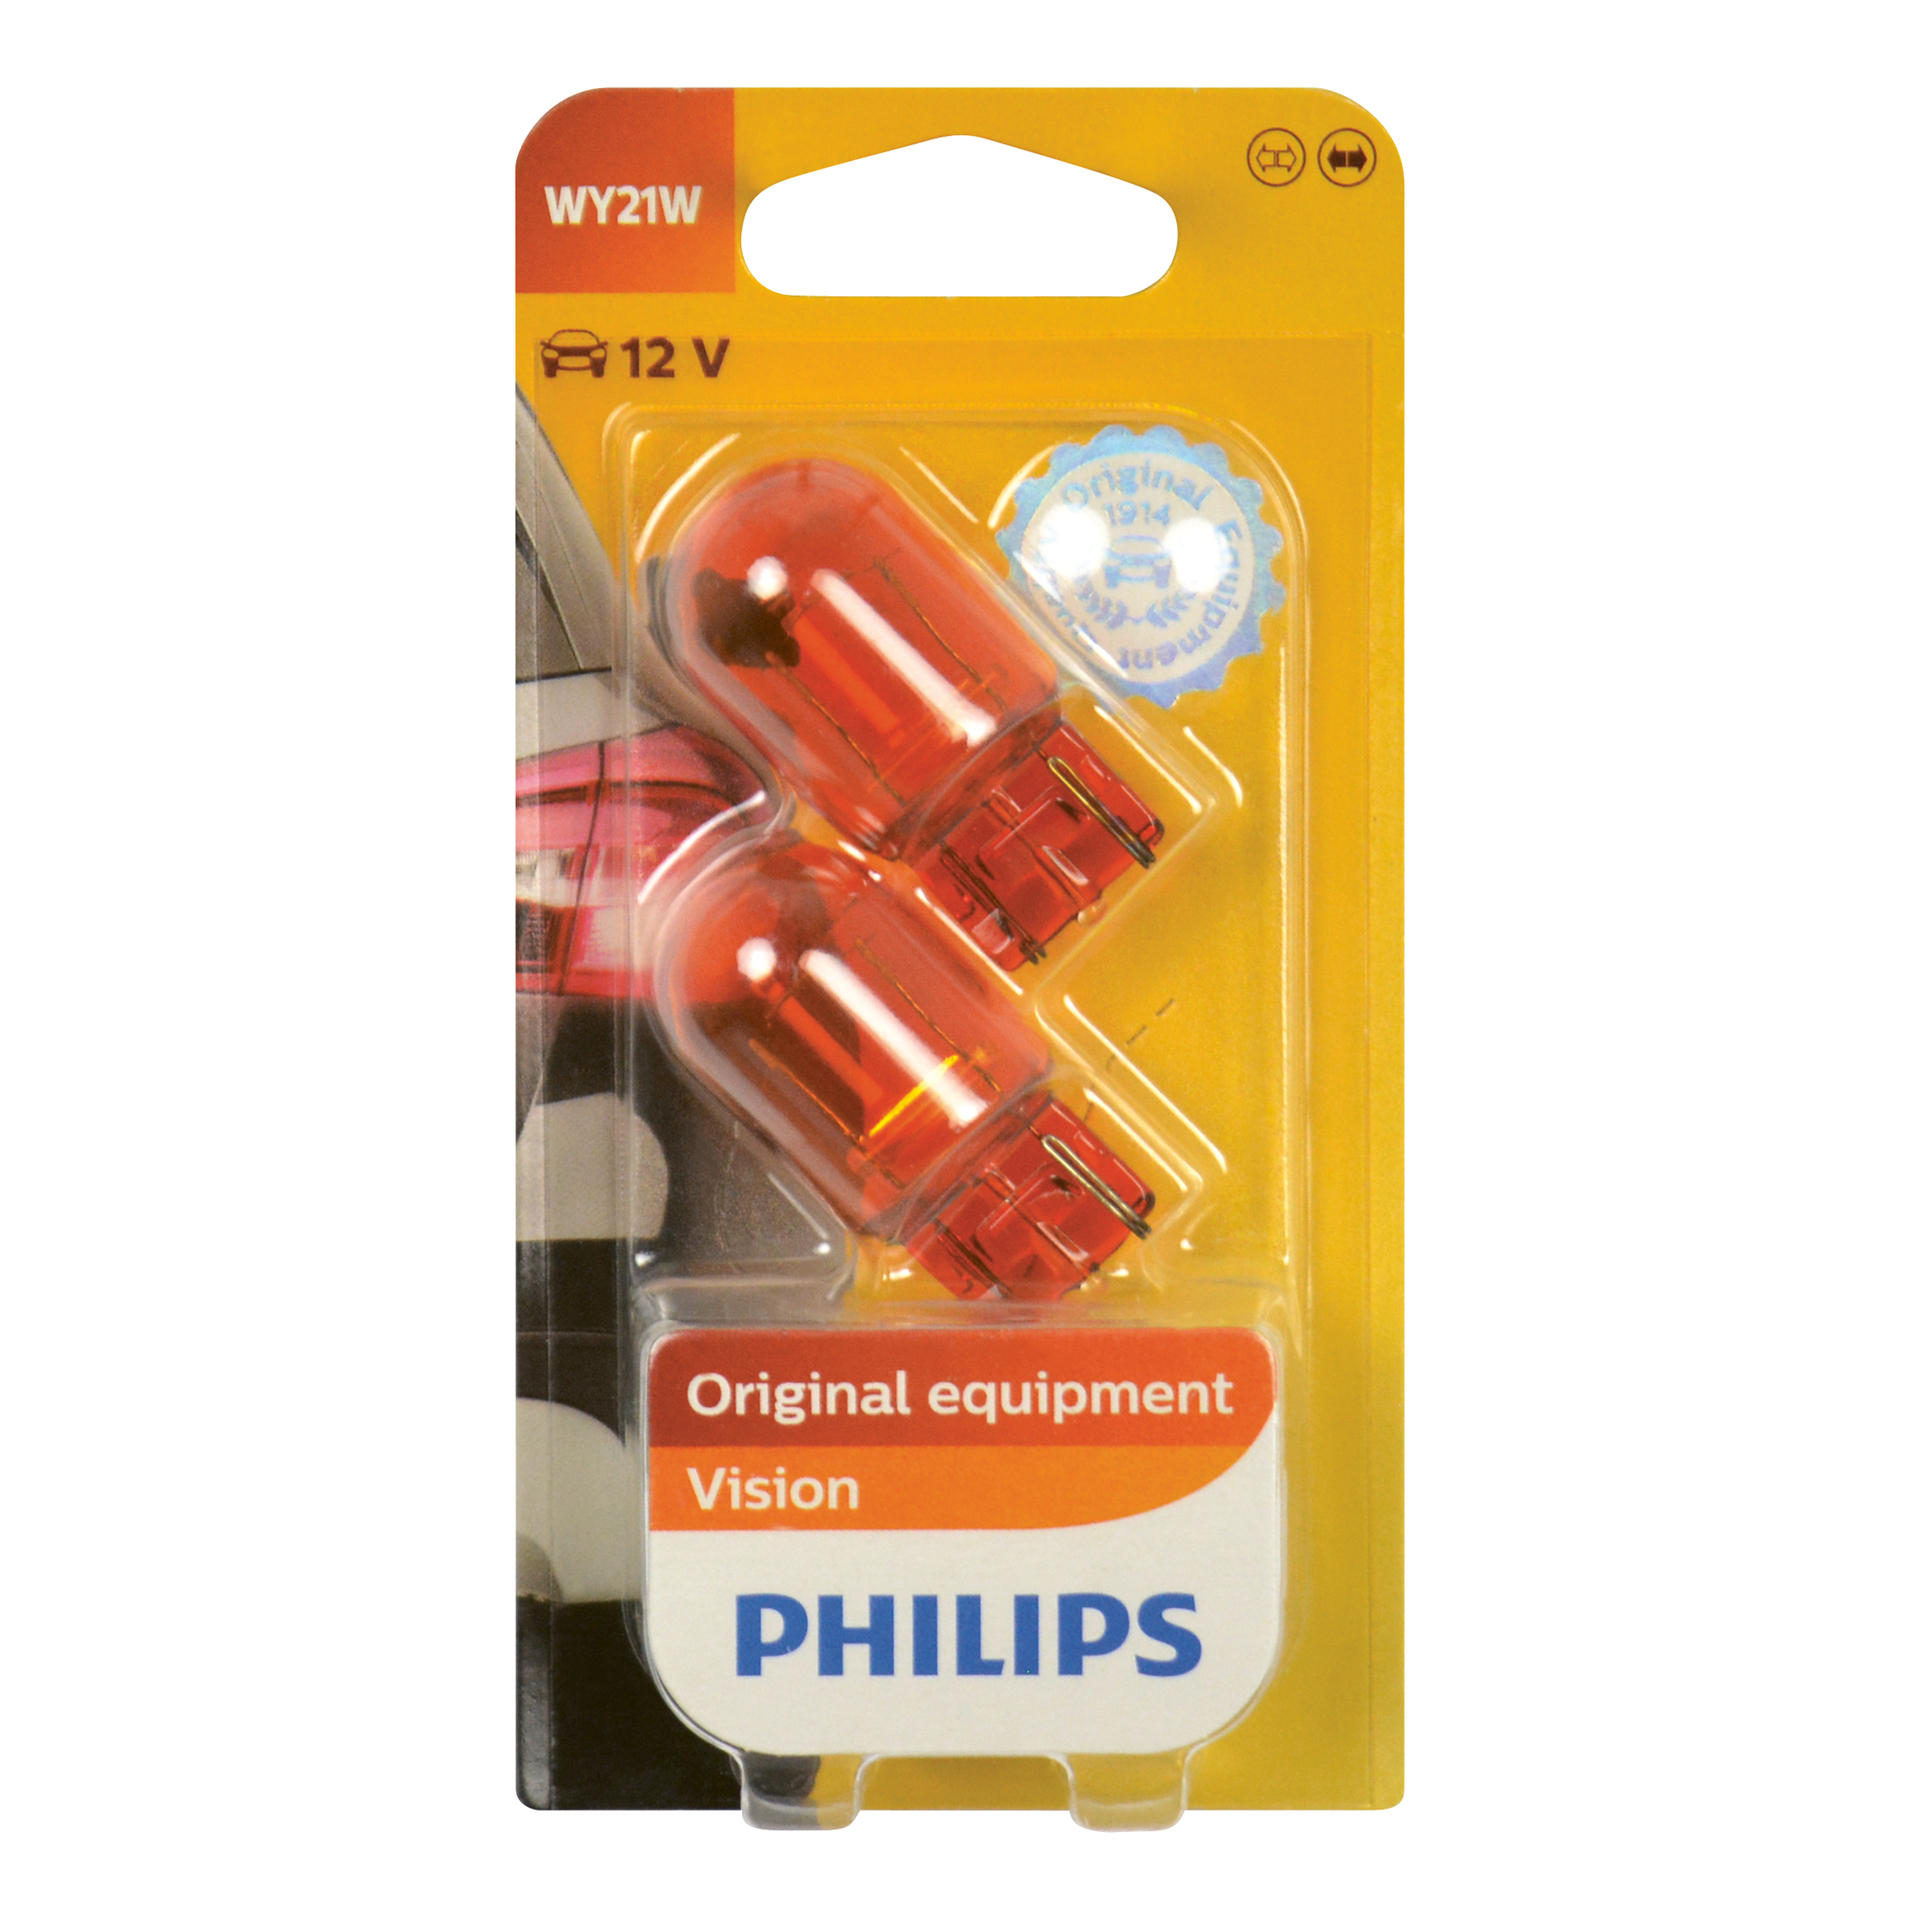 Philips Philips 12071B2 Wedgebase WY21W 0730074